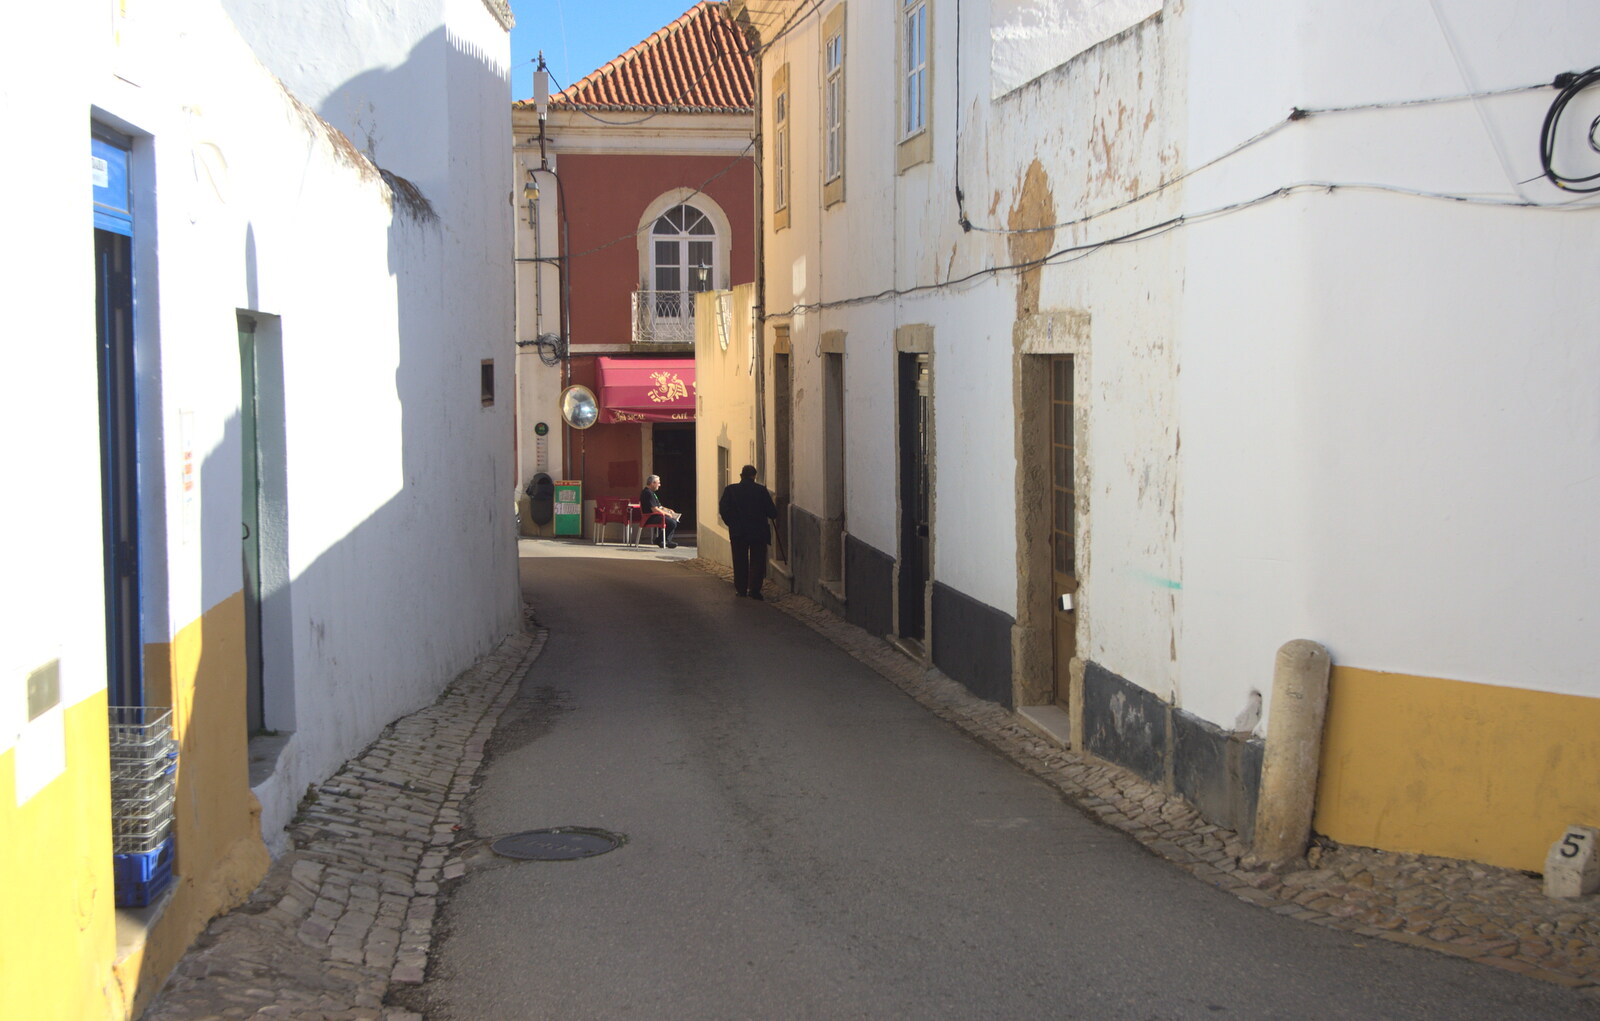 Alcantarilha back street from Gary and Vanessa's Barbeque, Alcantarilha, Algarve, Portugal - 7th April 2016